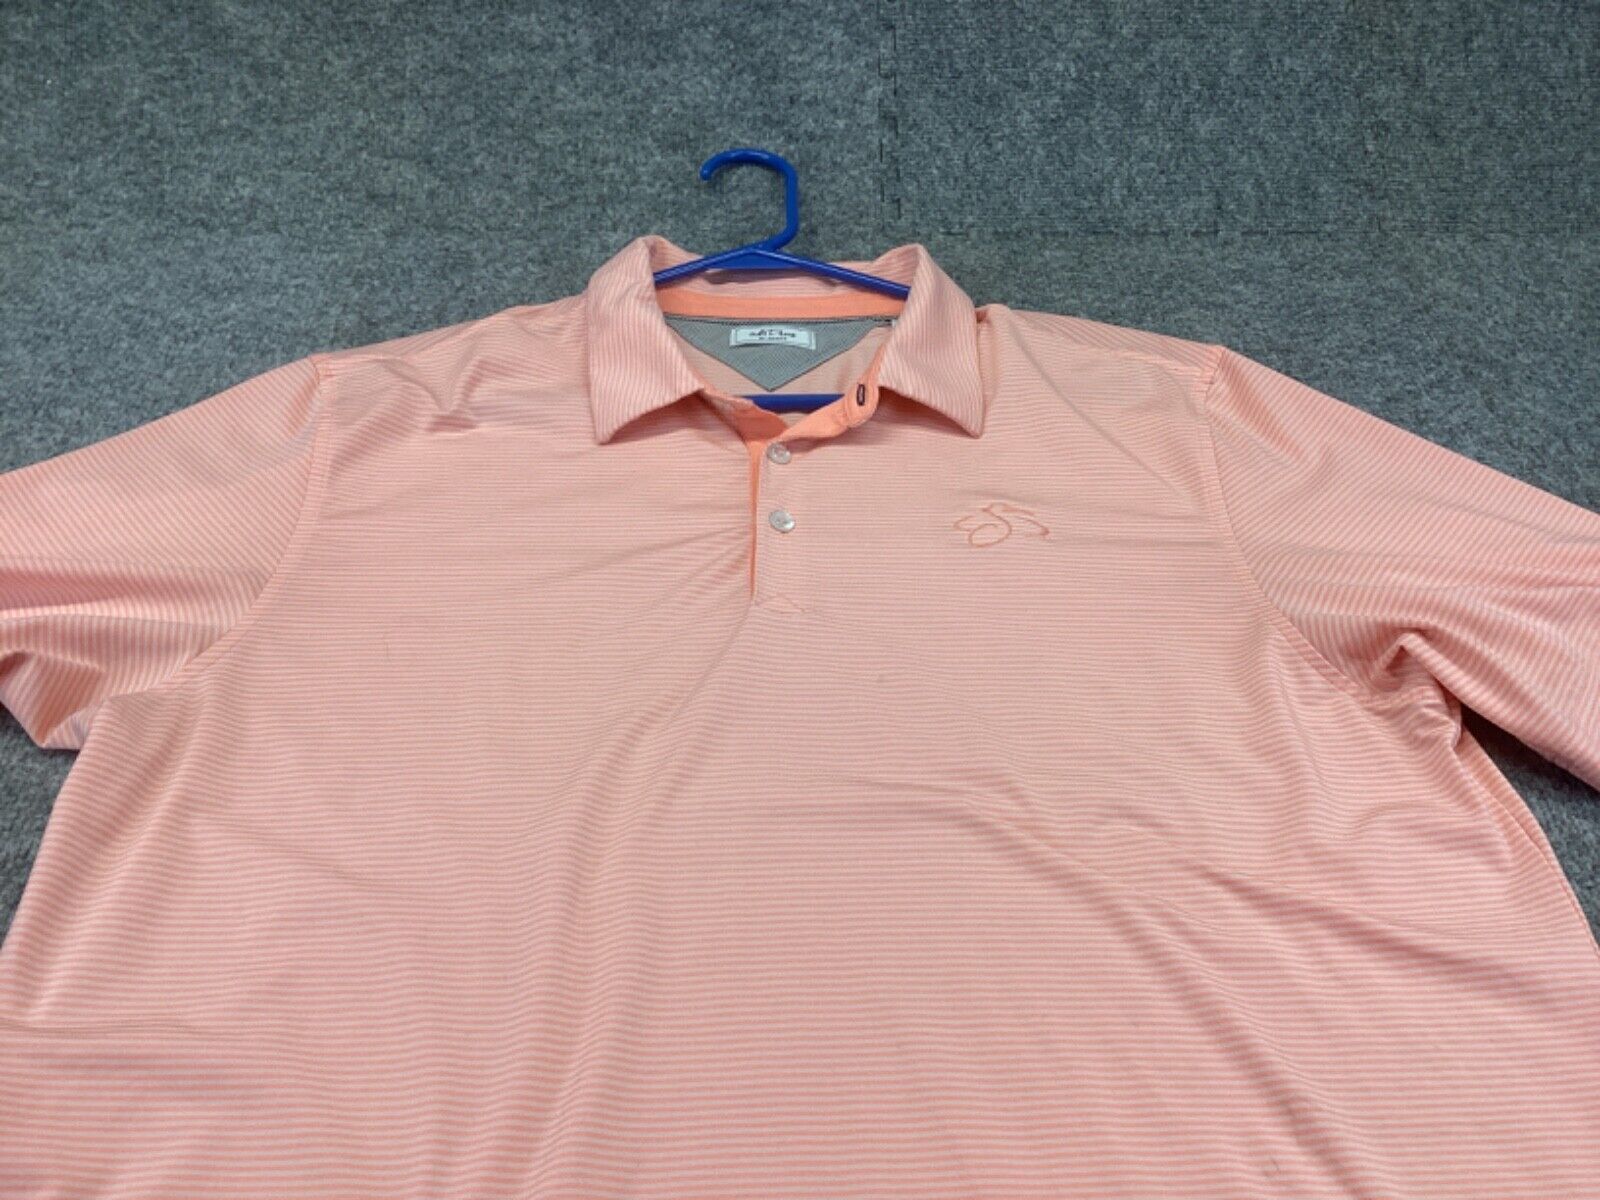 Primary image for Adidas AdiPure Polo Shirt Mens Medium Short Sleeve Peach Striped Embroidery Golf